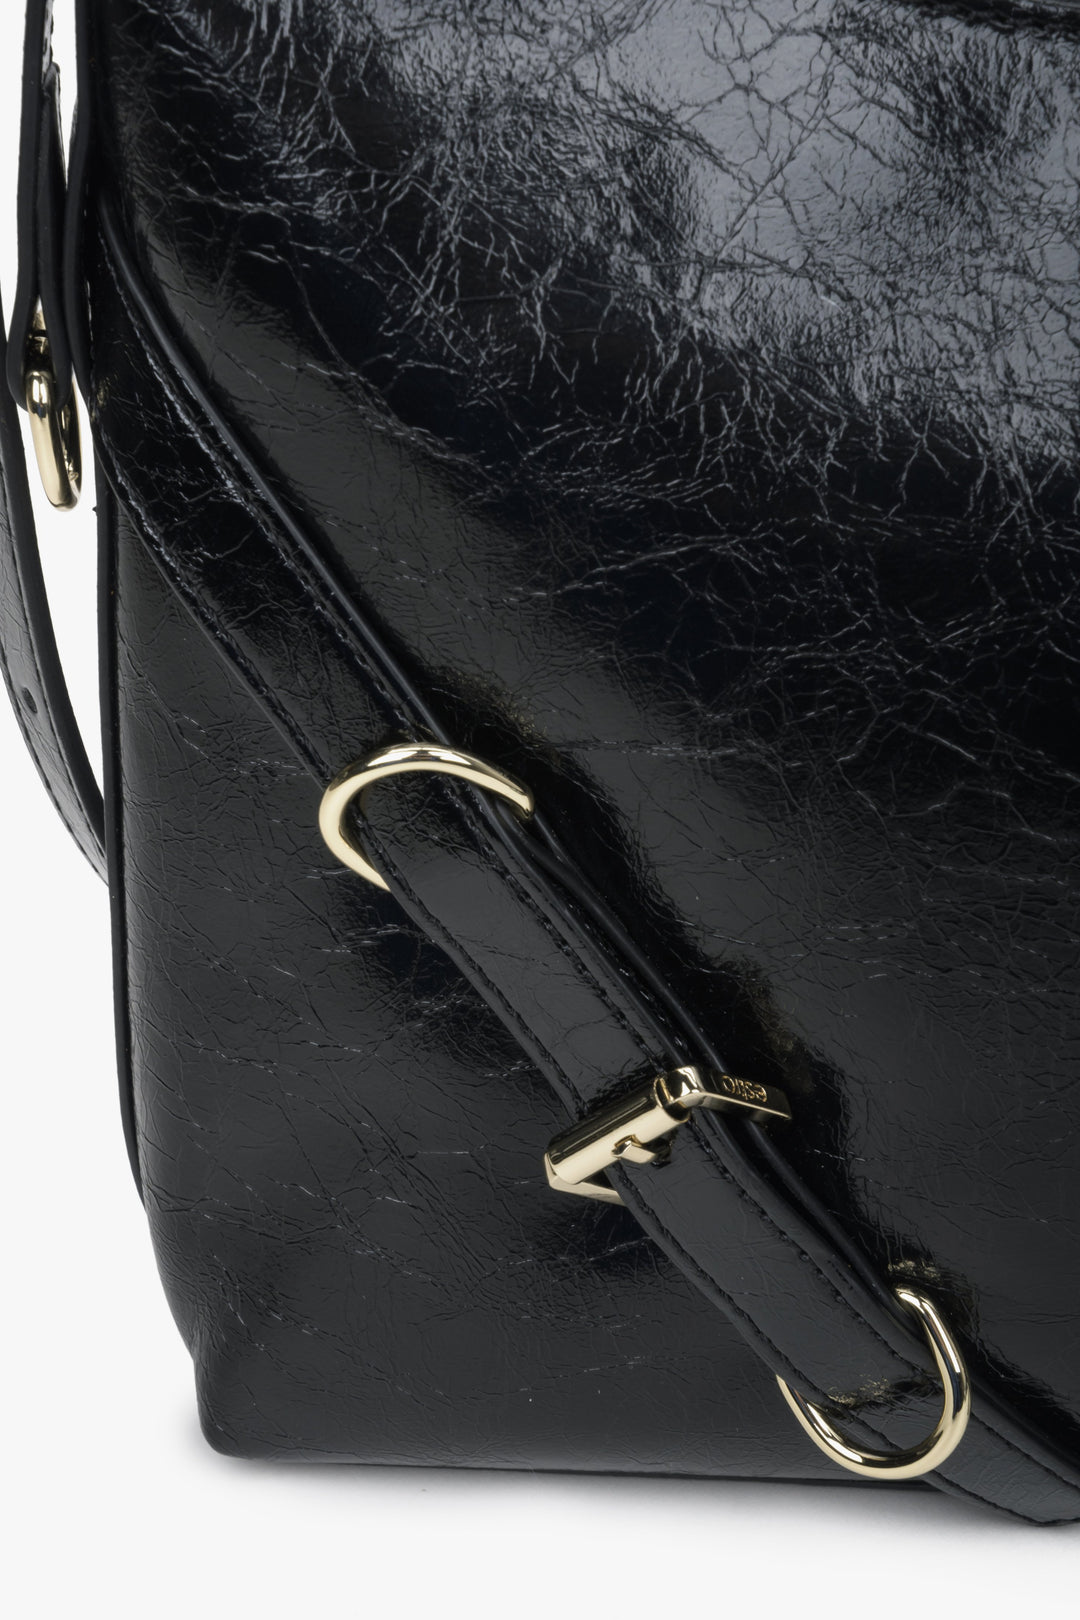 Women's black Estro leather shoulder bag - close-up on the detail.